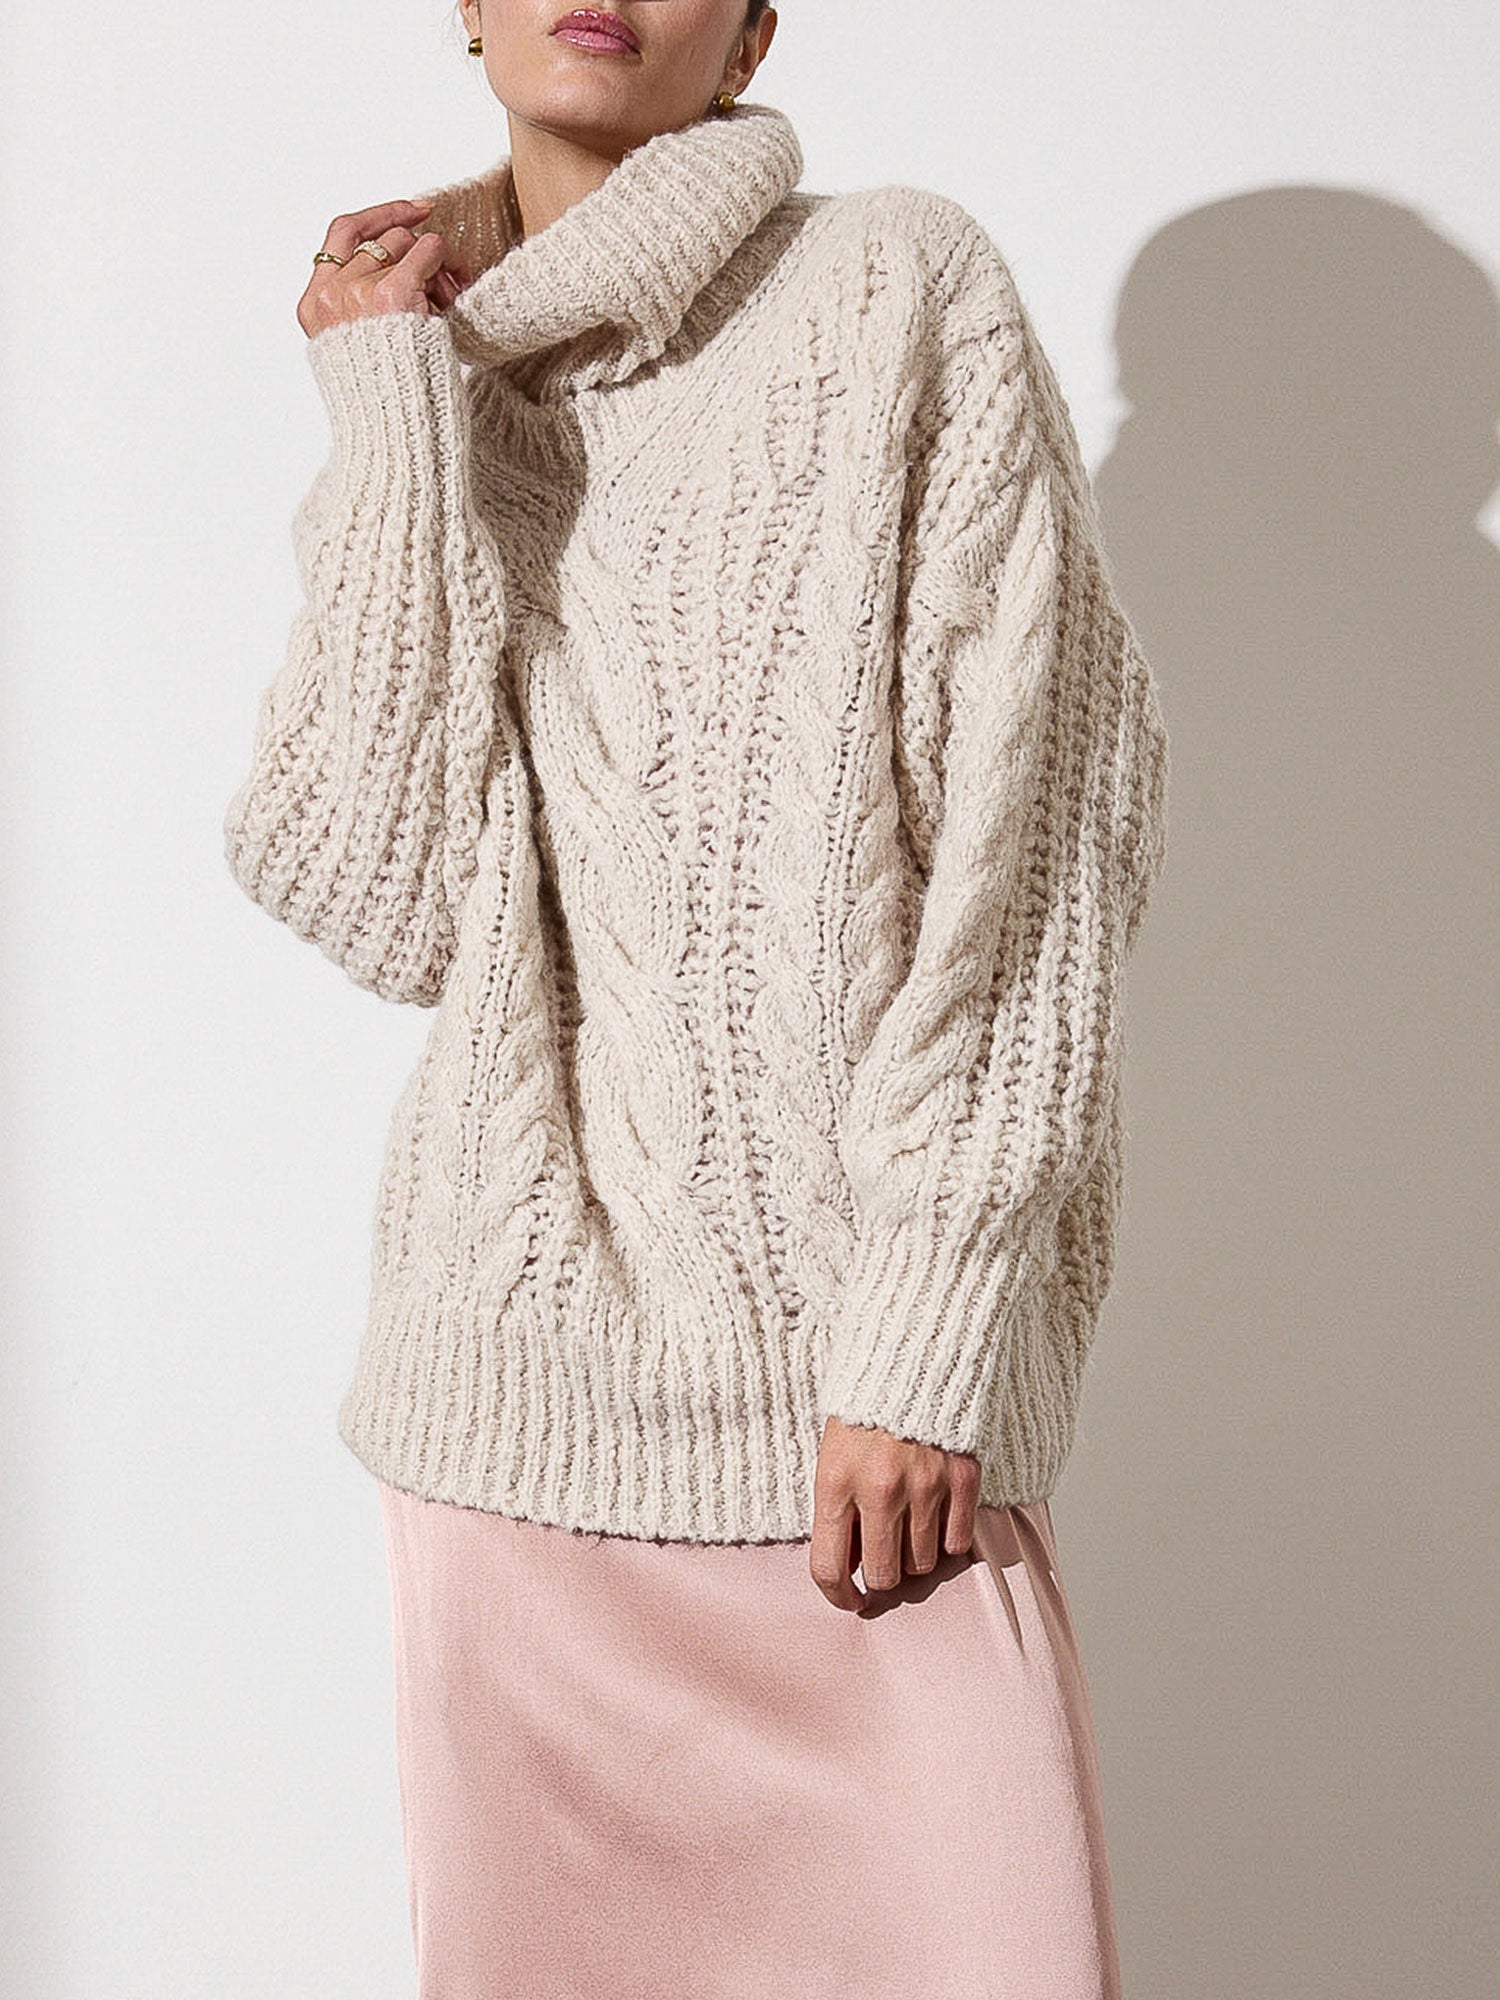 Elden cable knit beige turtleneck sweater front view